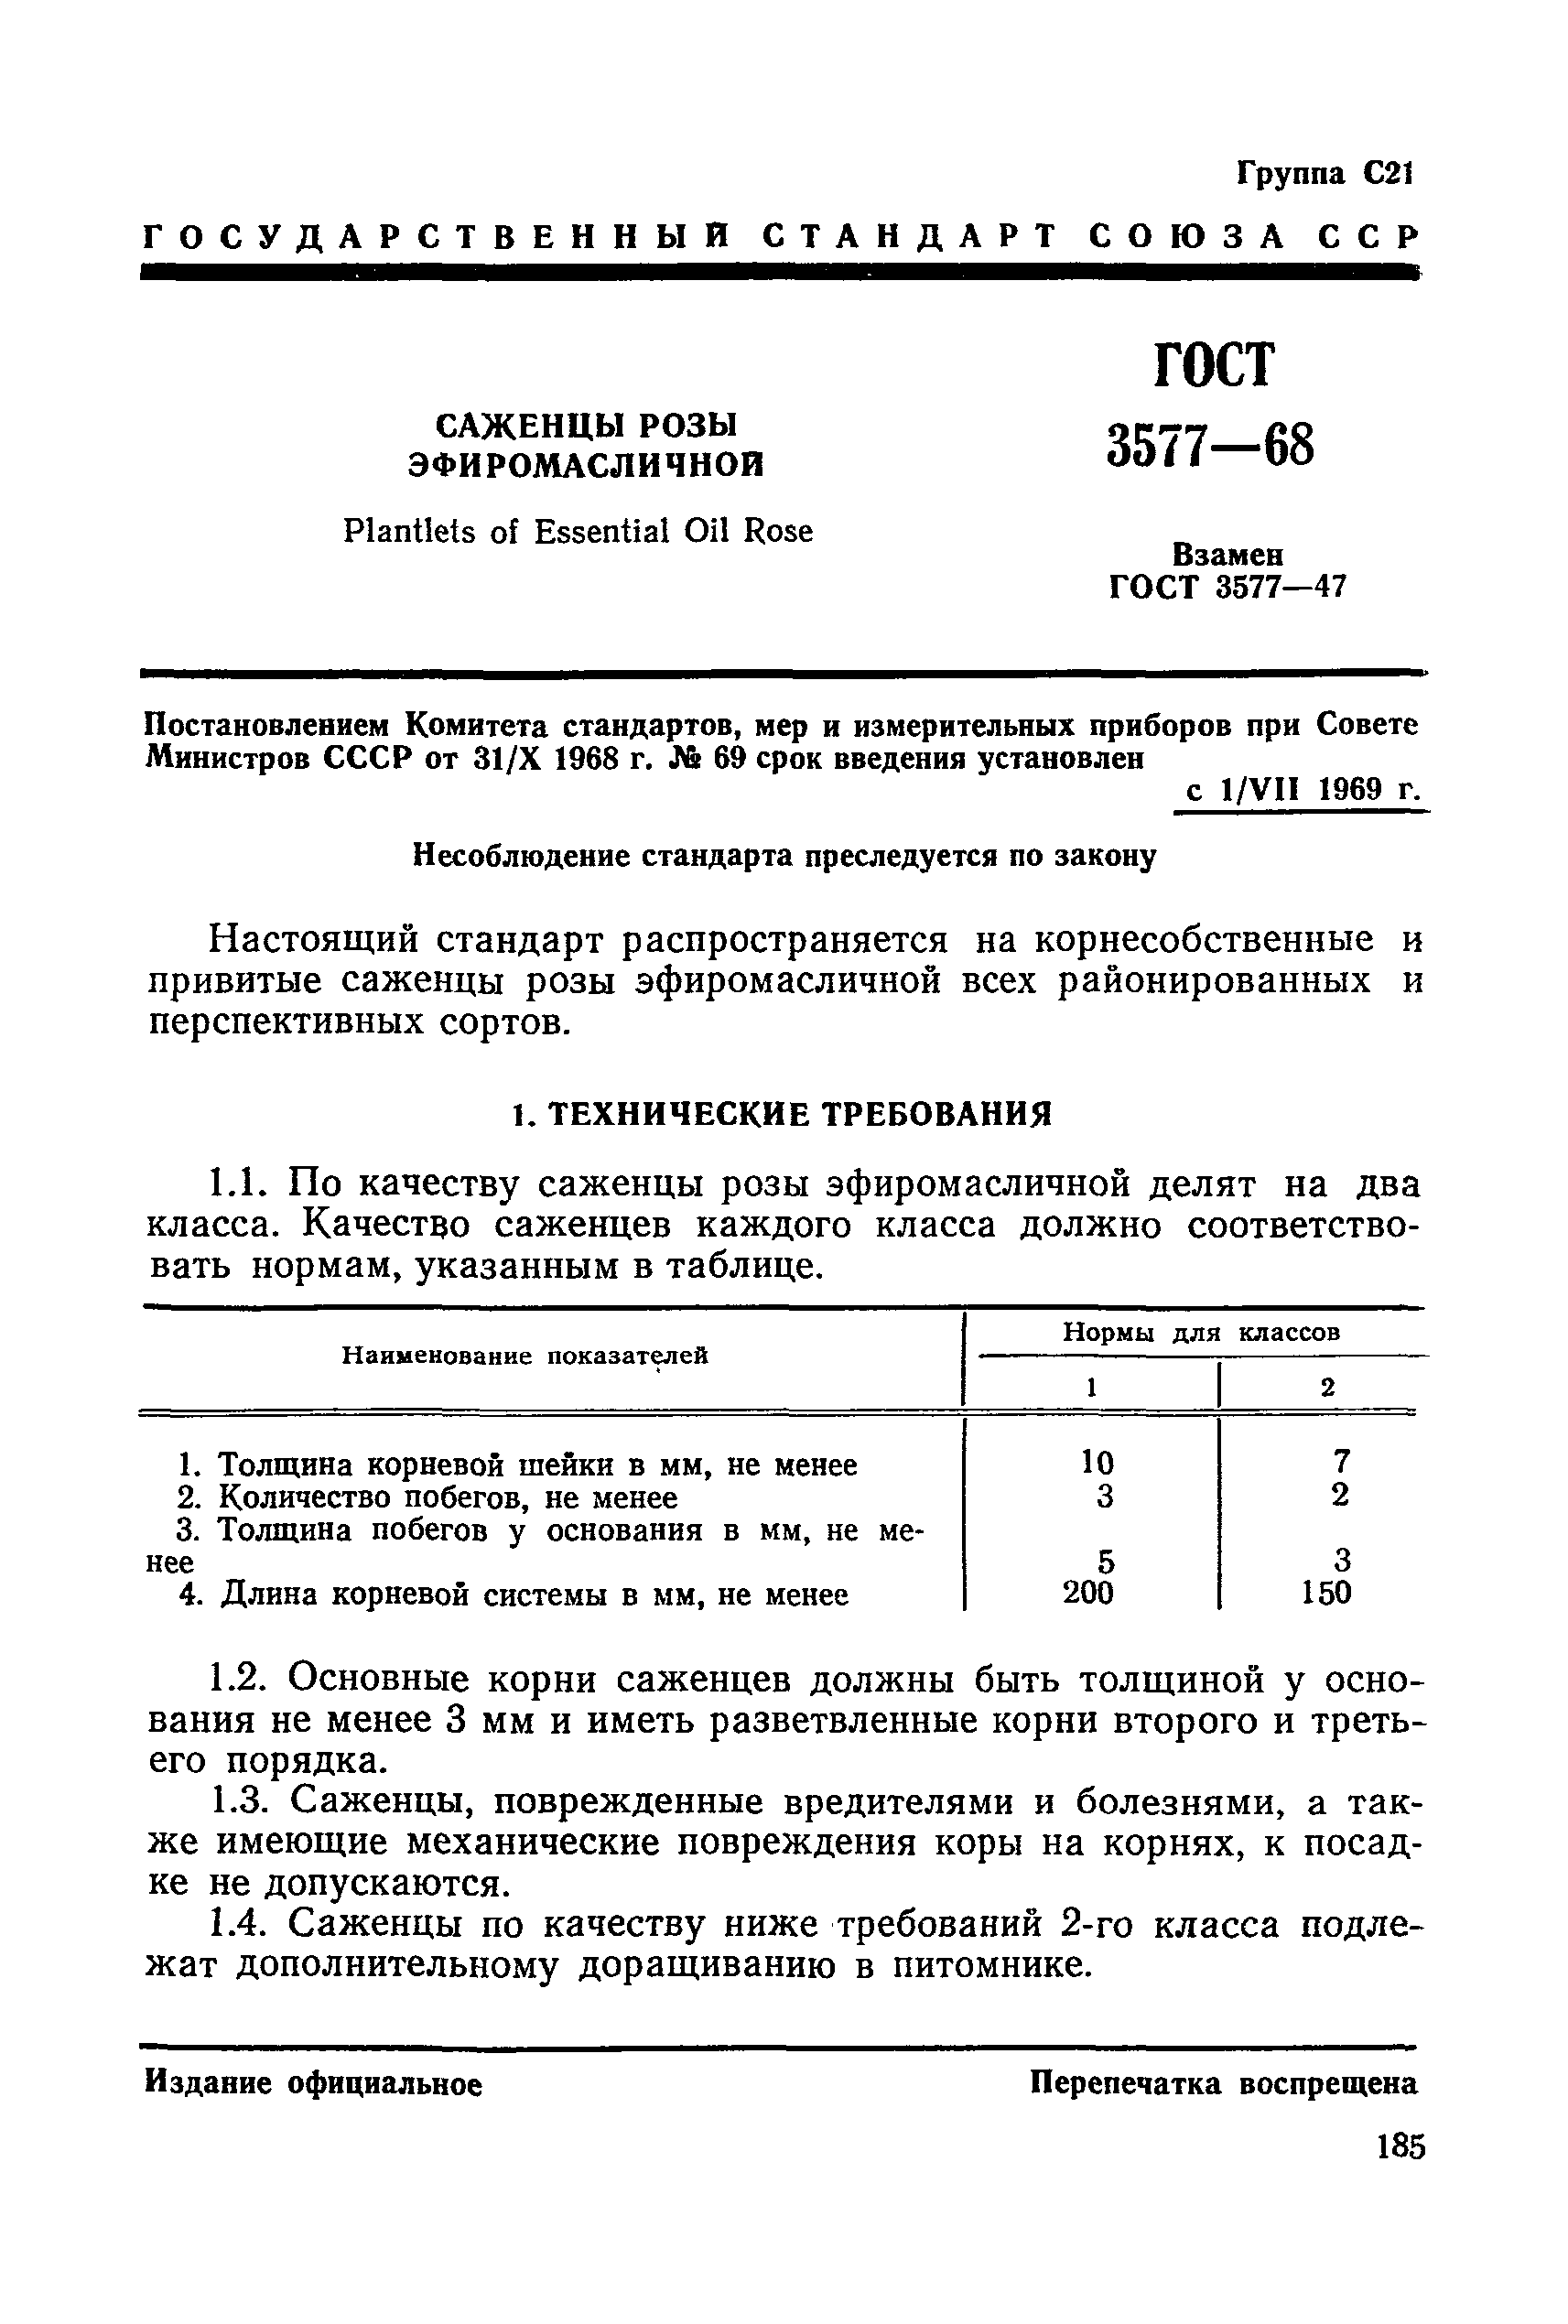 ГОСТ 3577-68